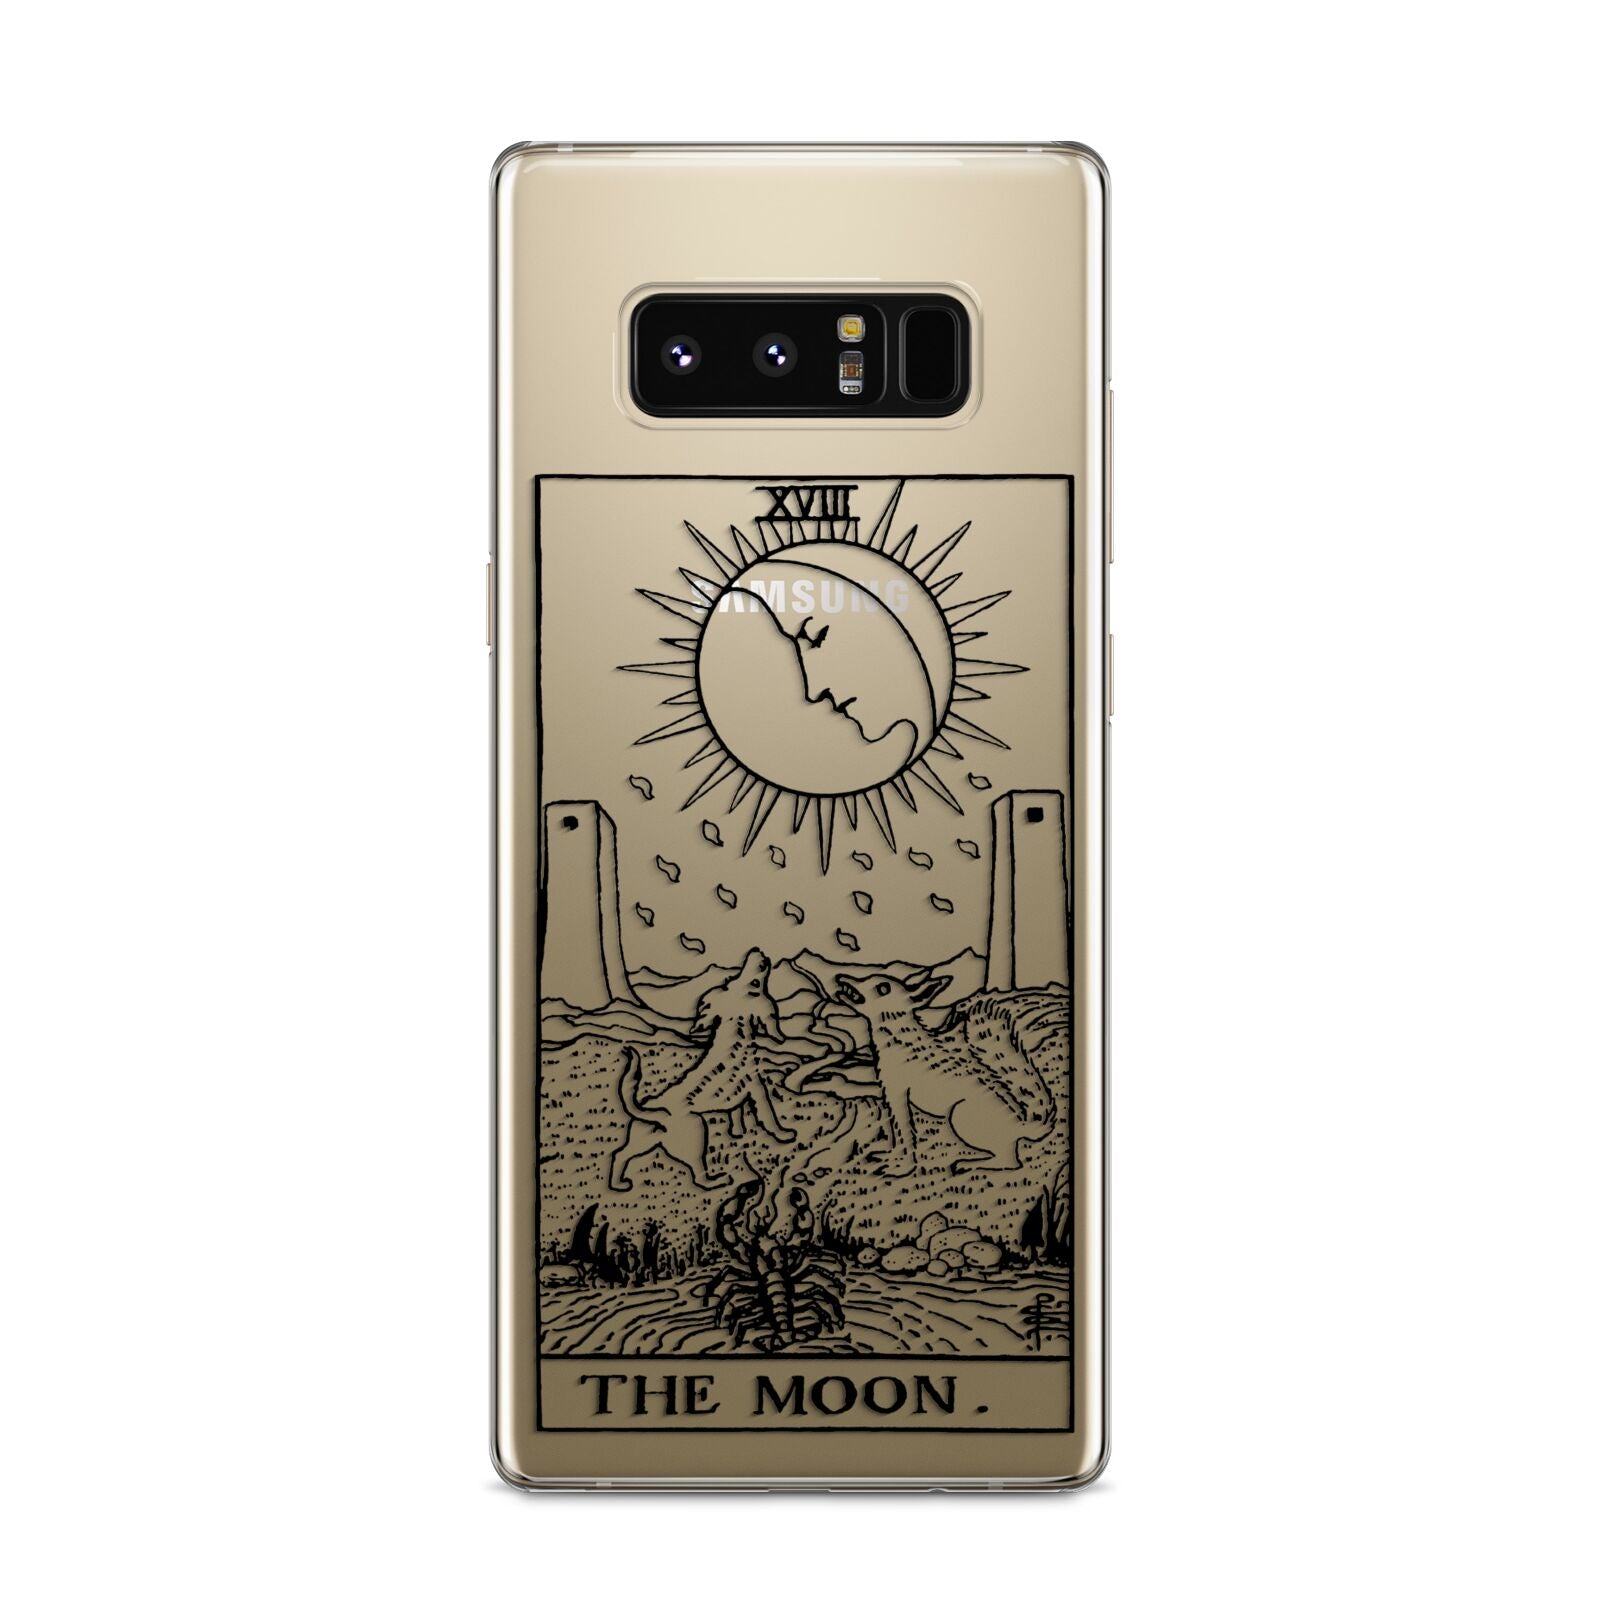 The Moon Monochrome Samsung Galaxy S8 Case